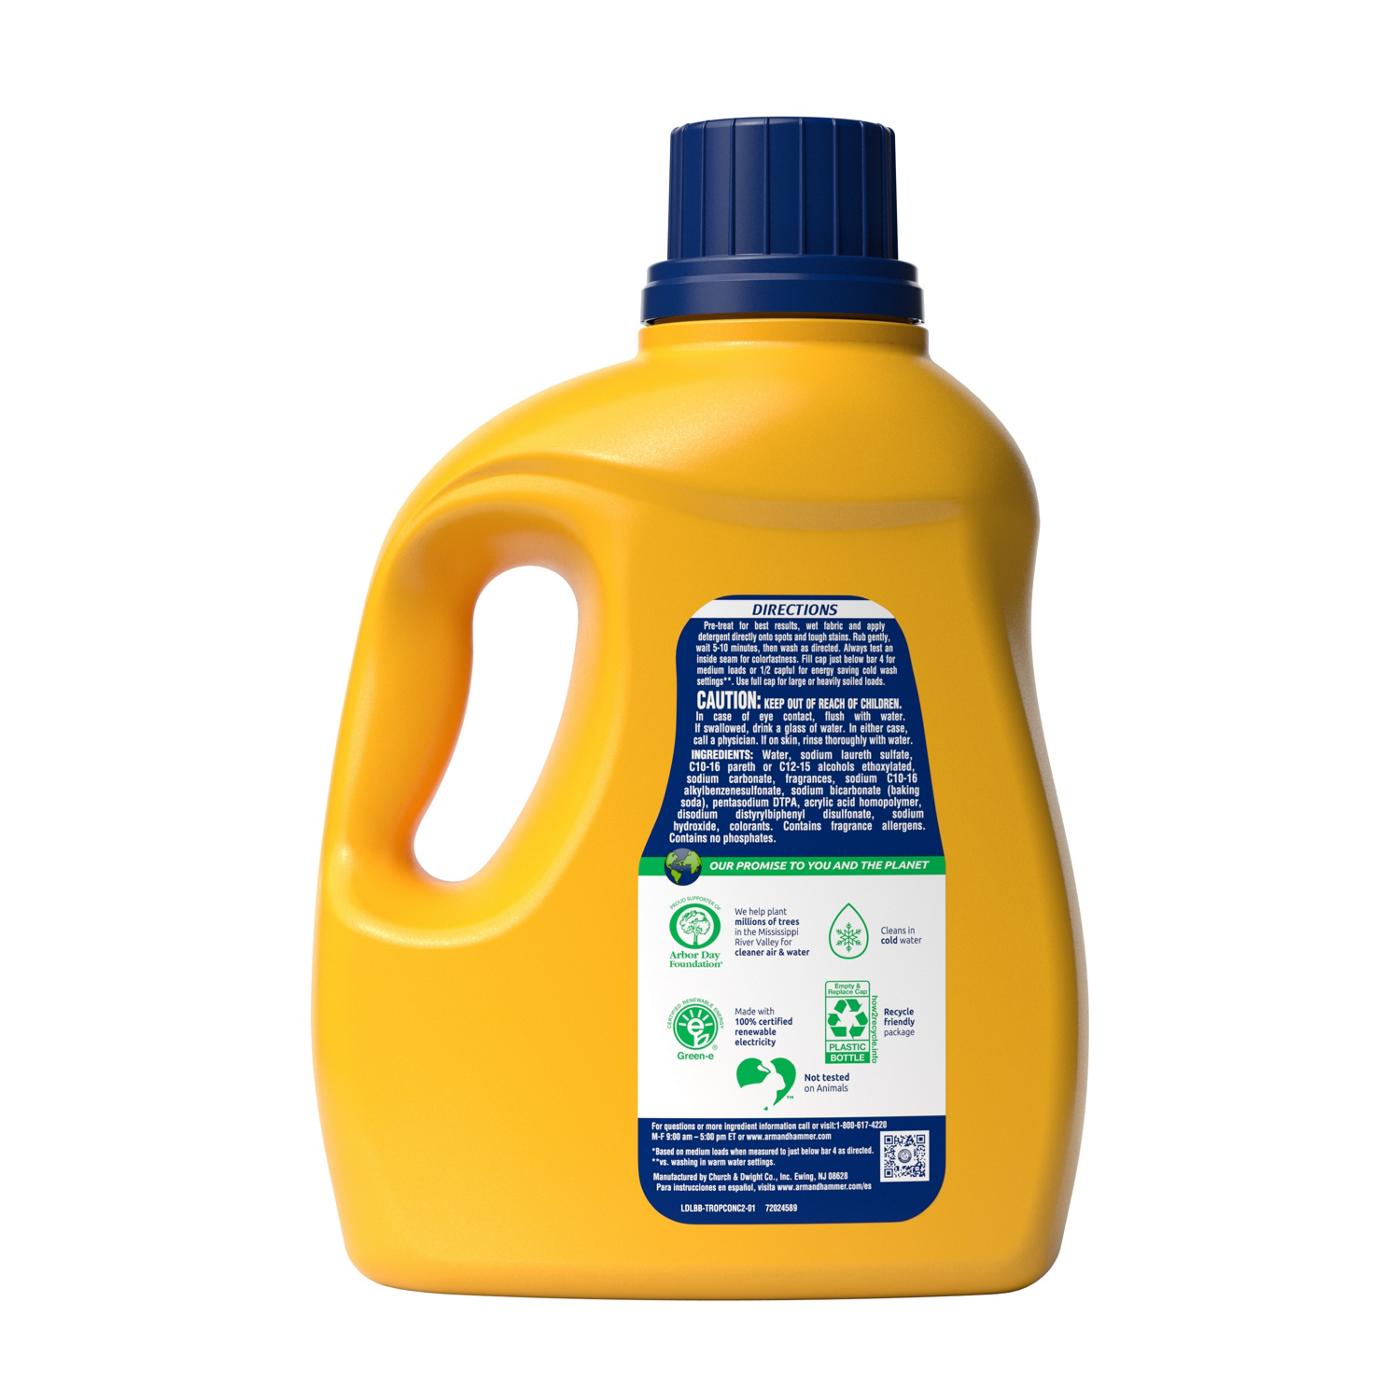 Arm & Hammer Deep Clean Odor HE Liquid Laundry Detergent, 68 Loads - Radiant Burst; image 2 of 2